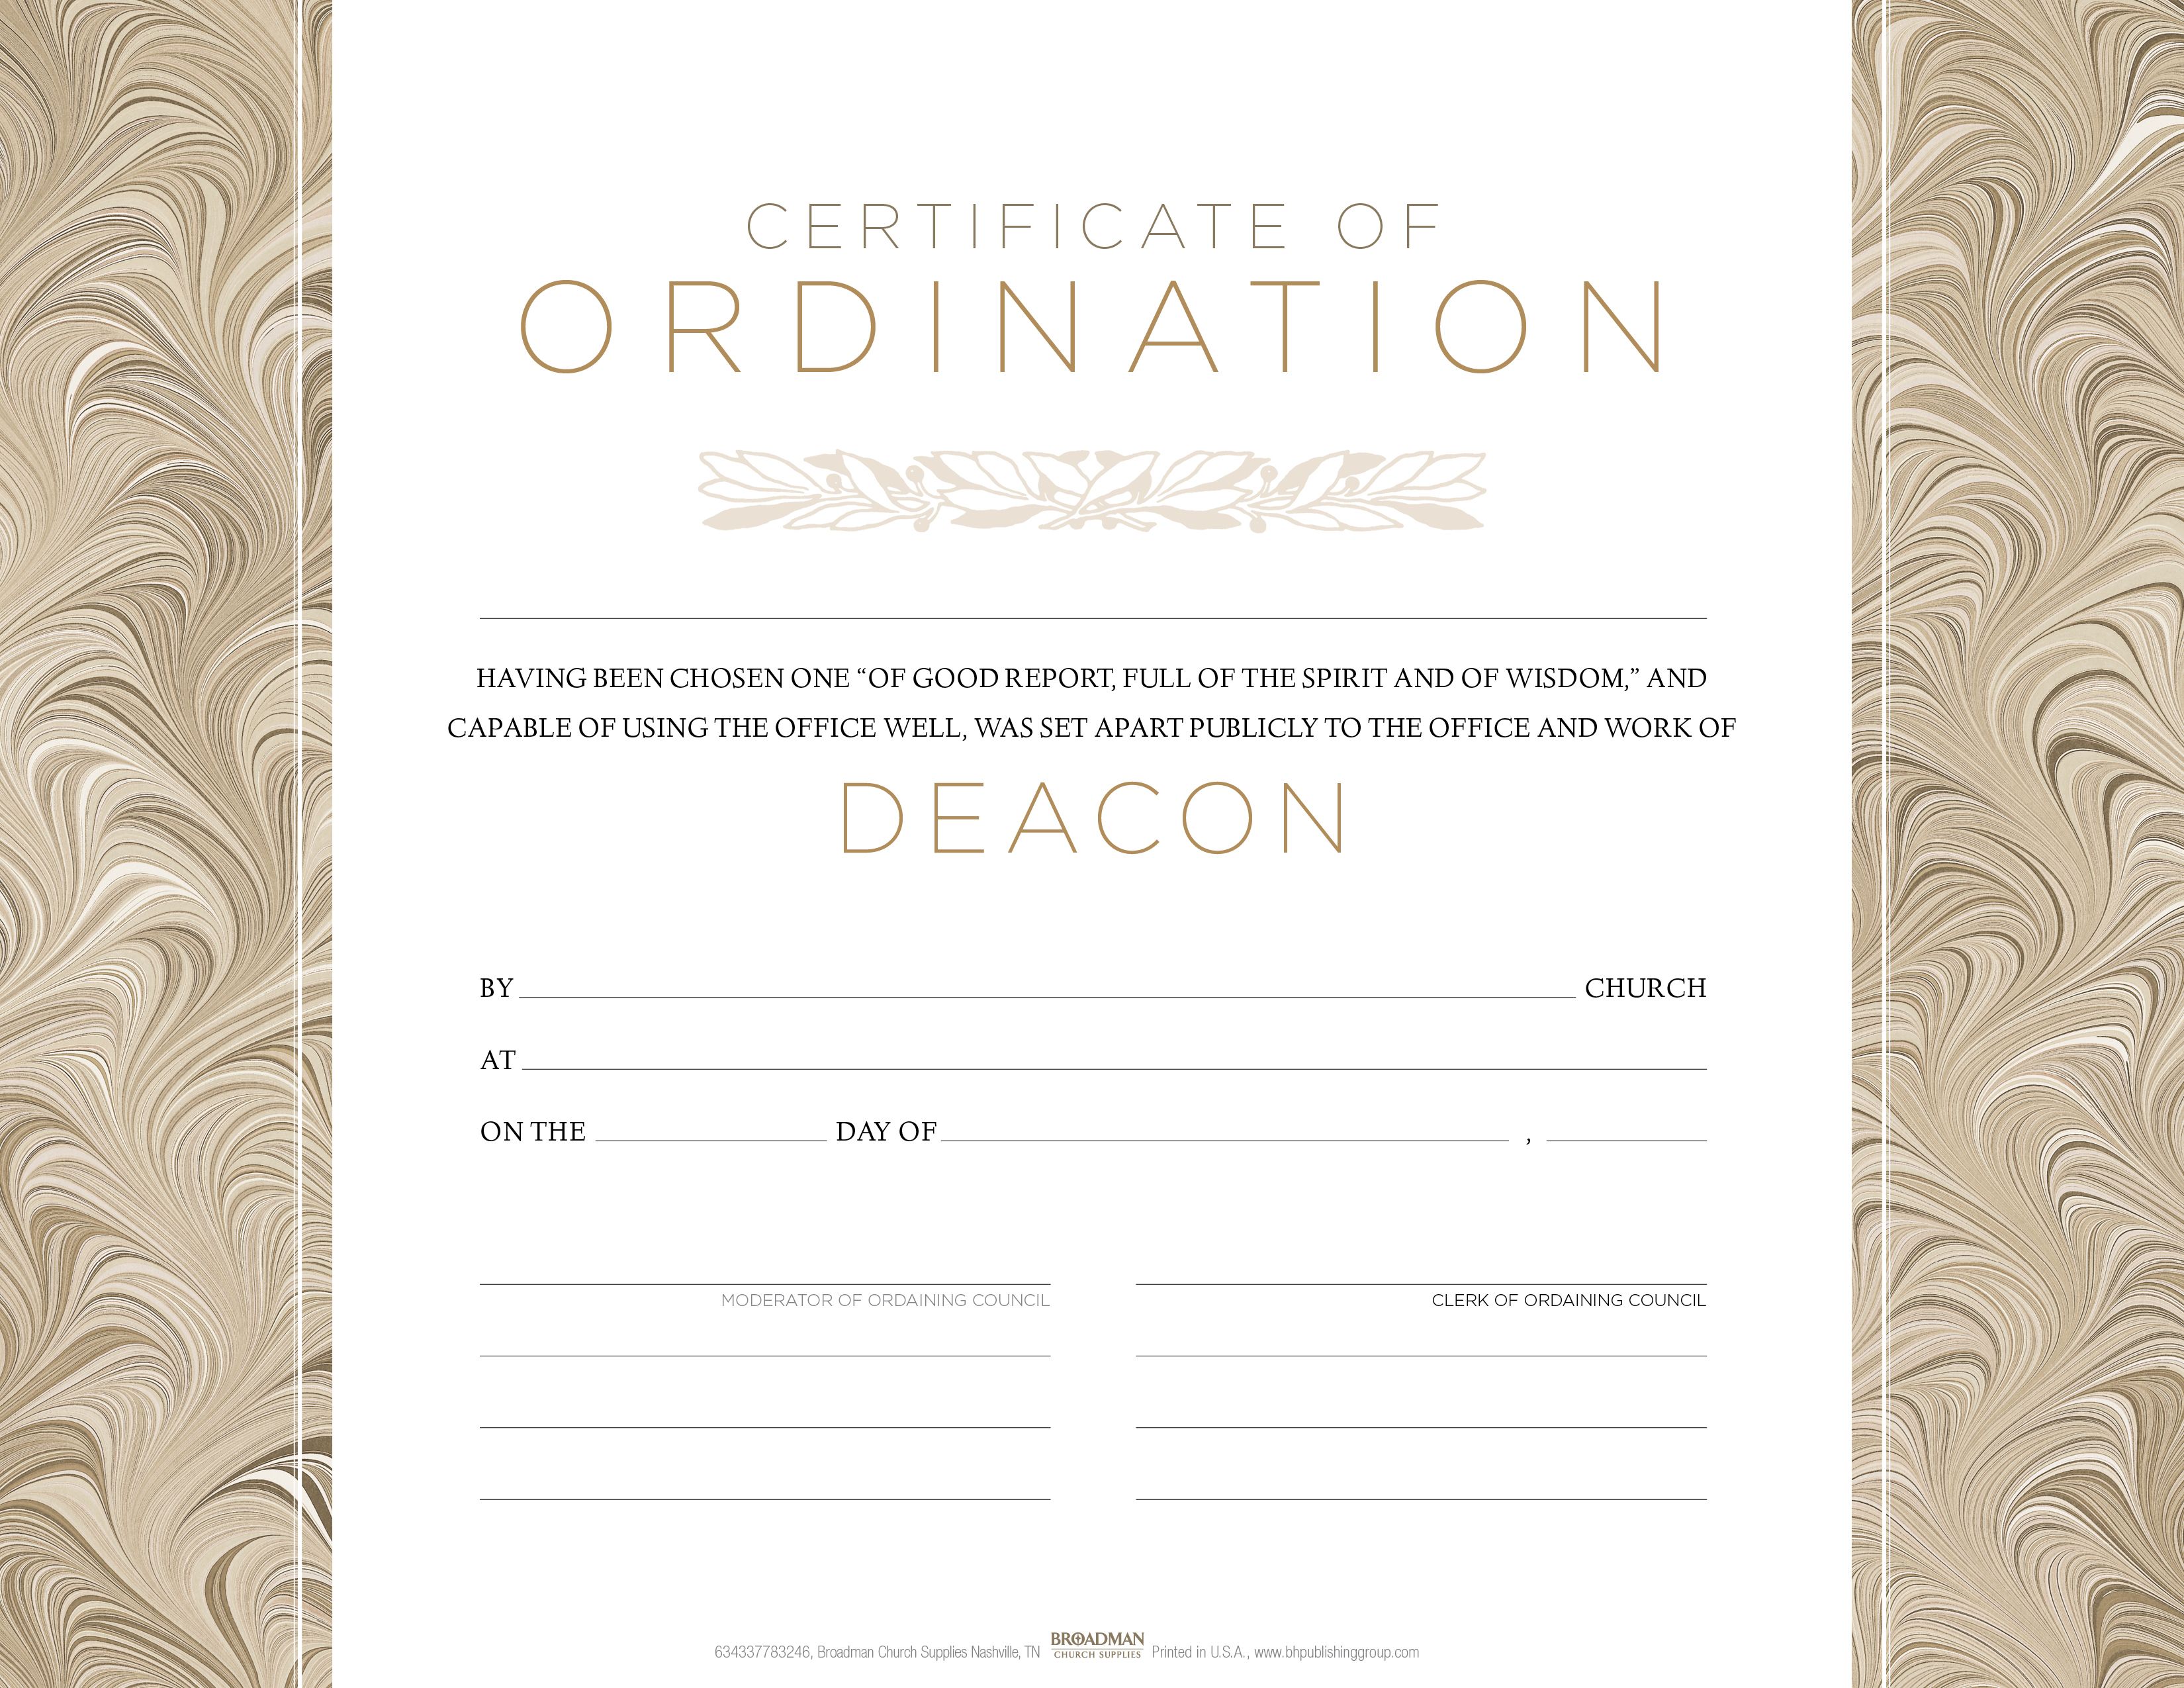 Deacon Ordination Flat Certificate (Pkg 23) - B&H Publishing Intended For Ordination Certificate Templates